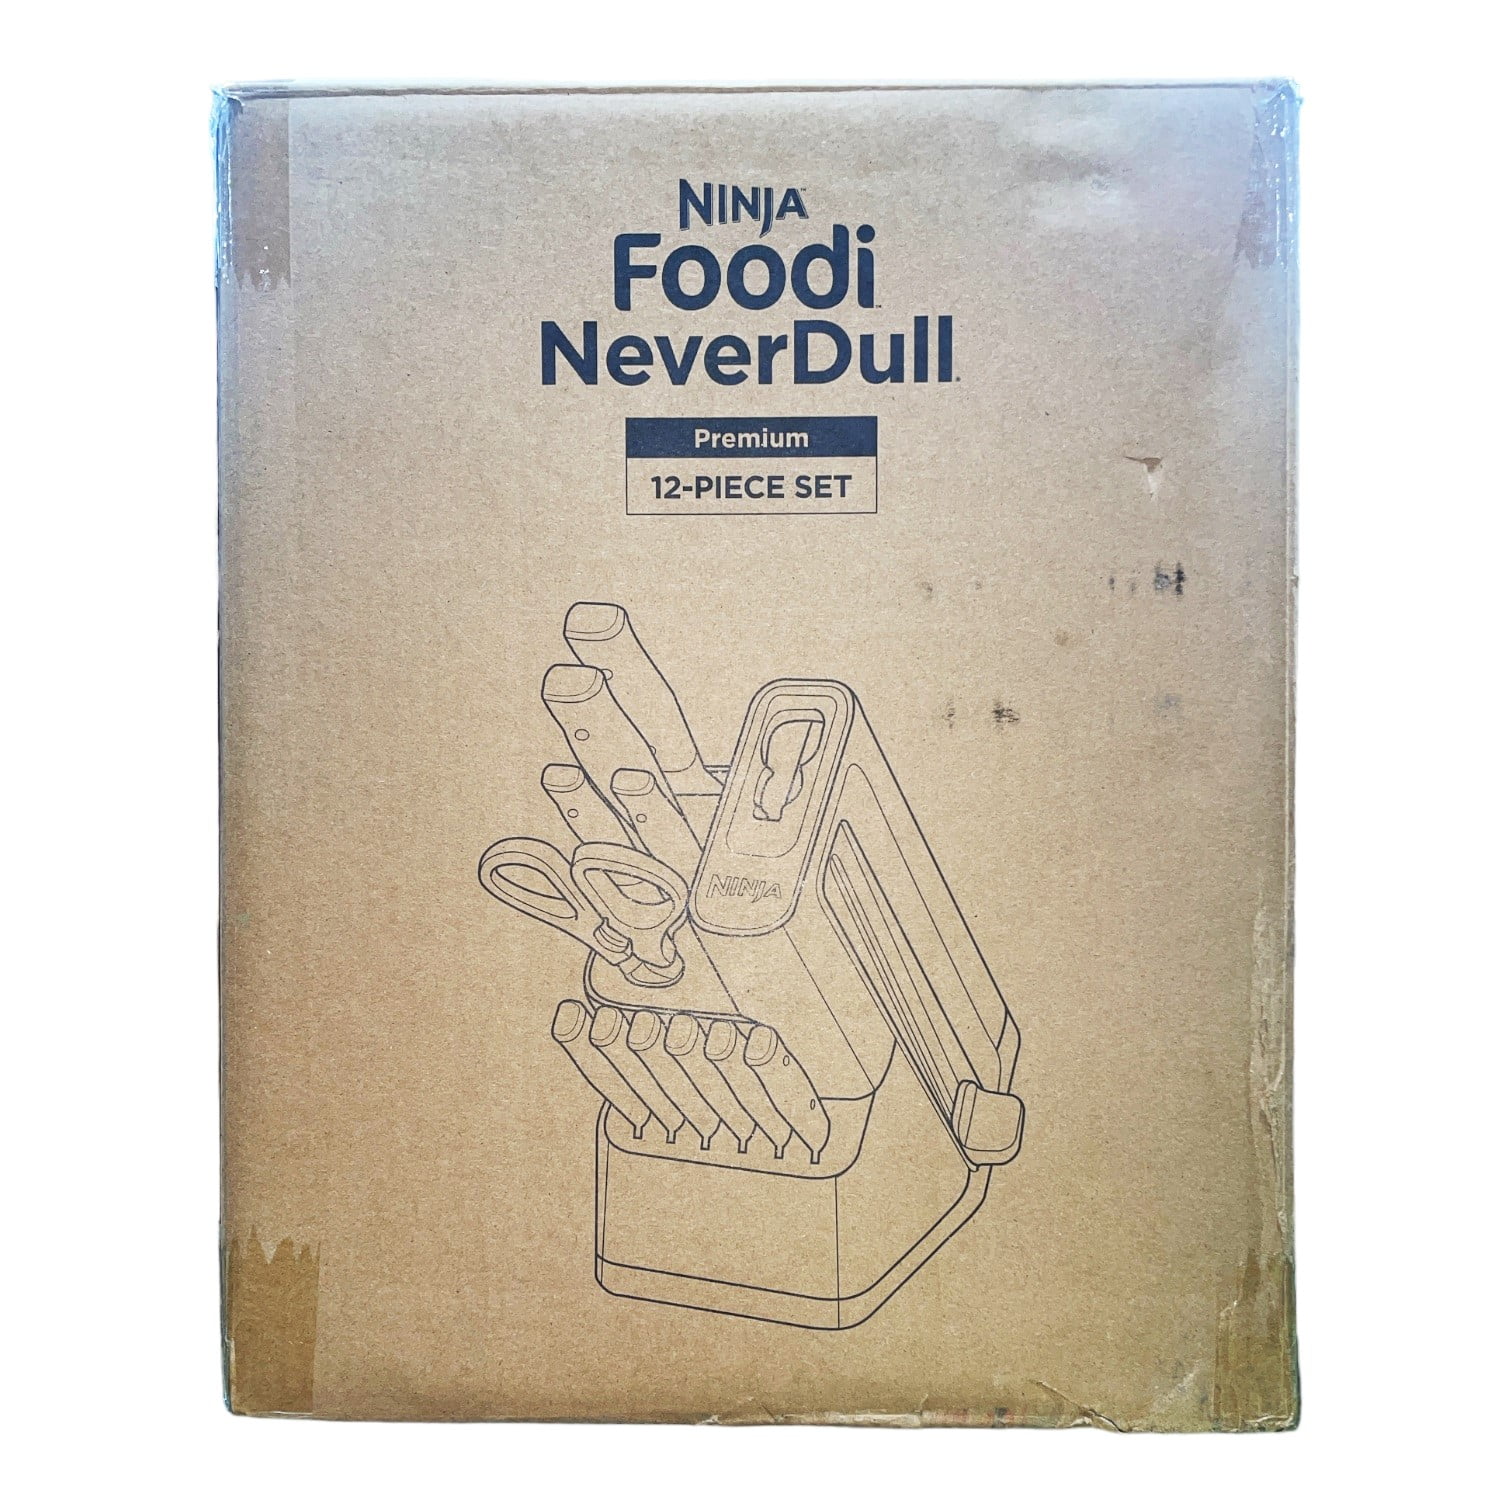 Ninja Foodi NeverDull Premium 12-Piece German Stainless Steel